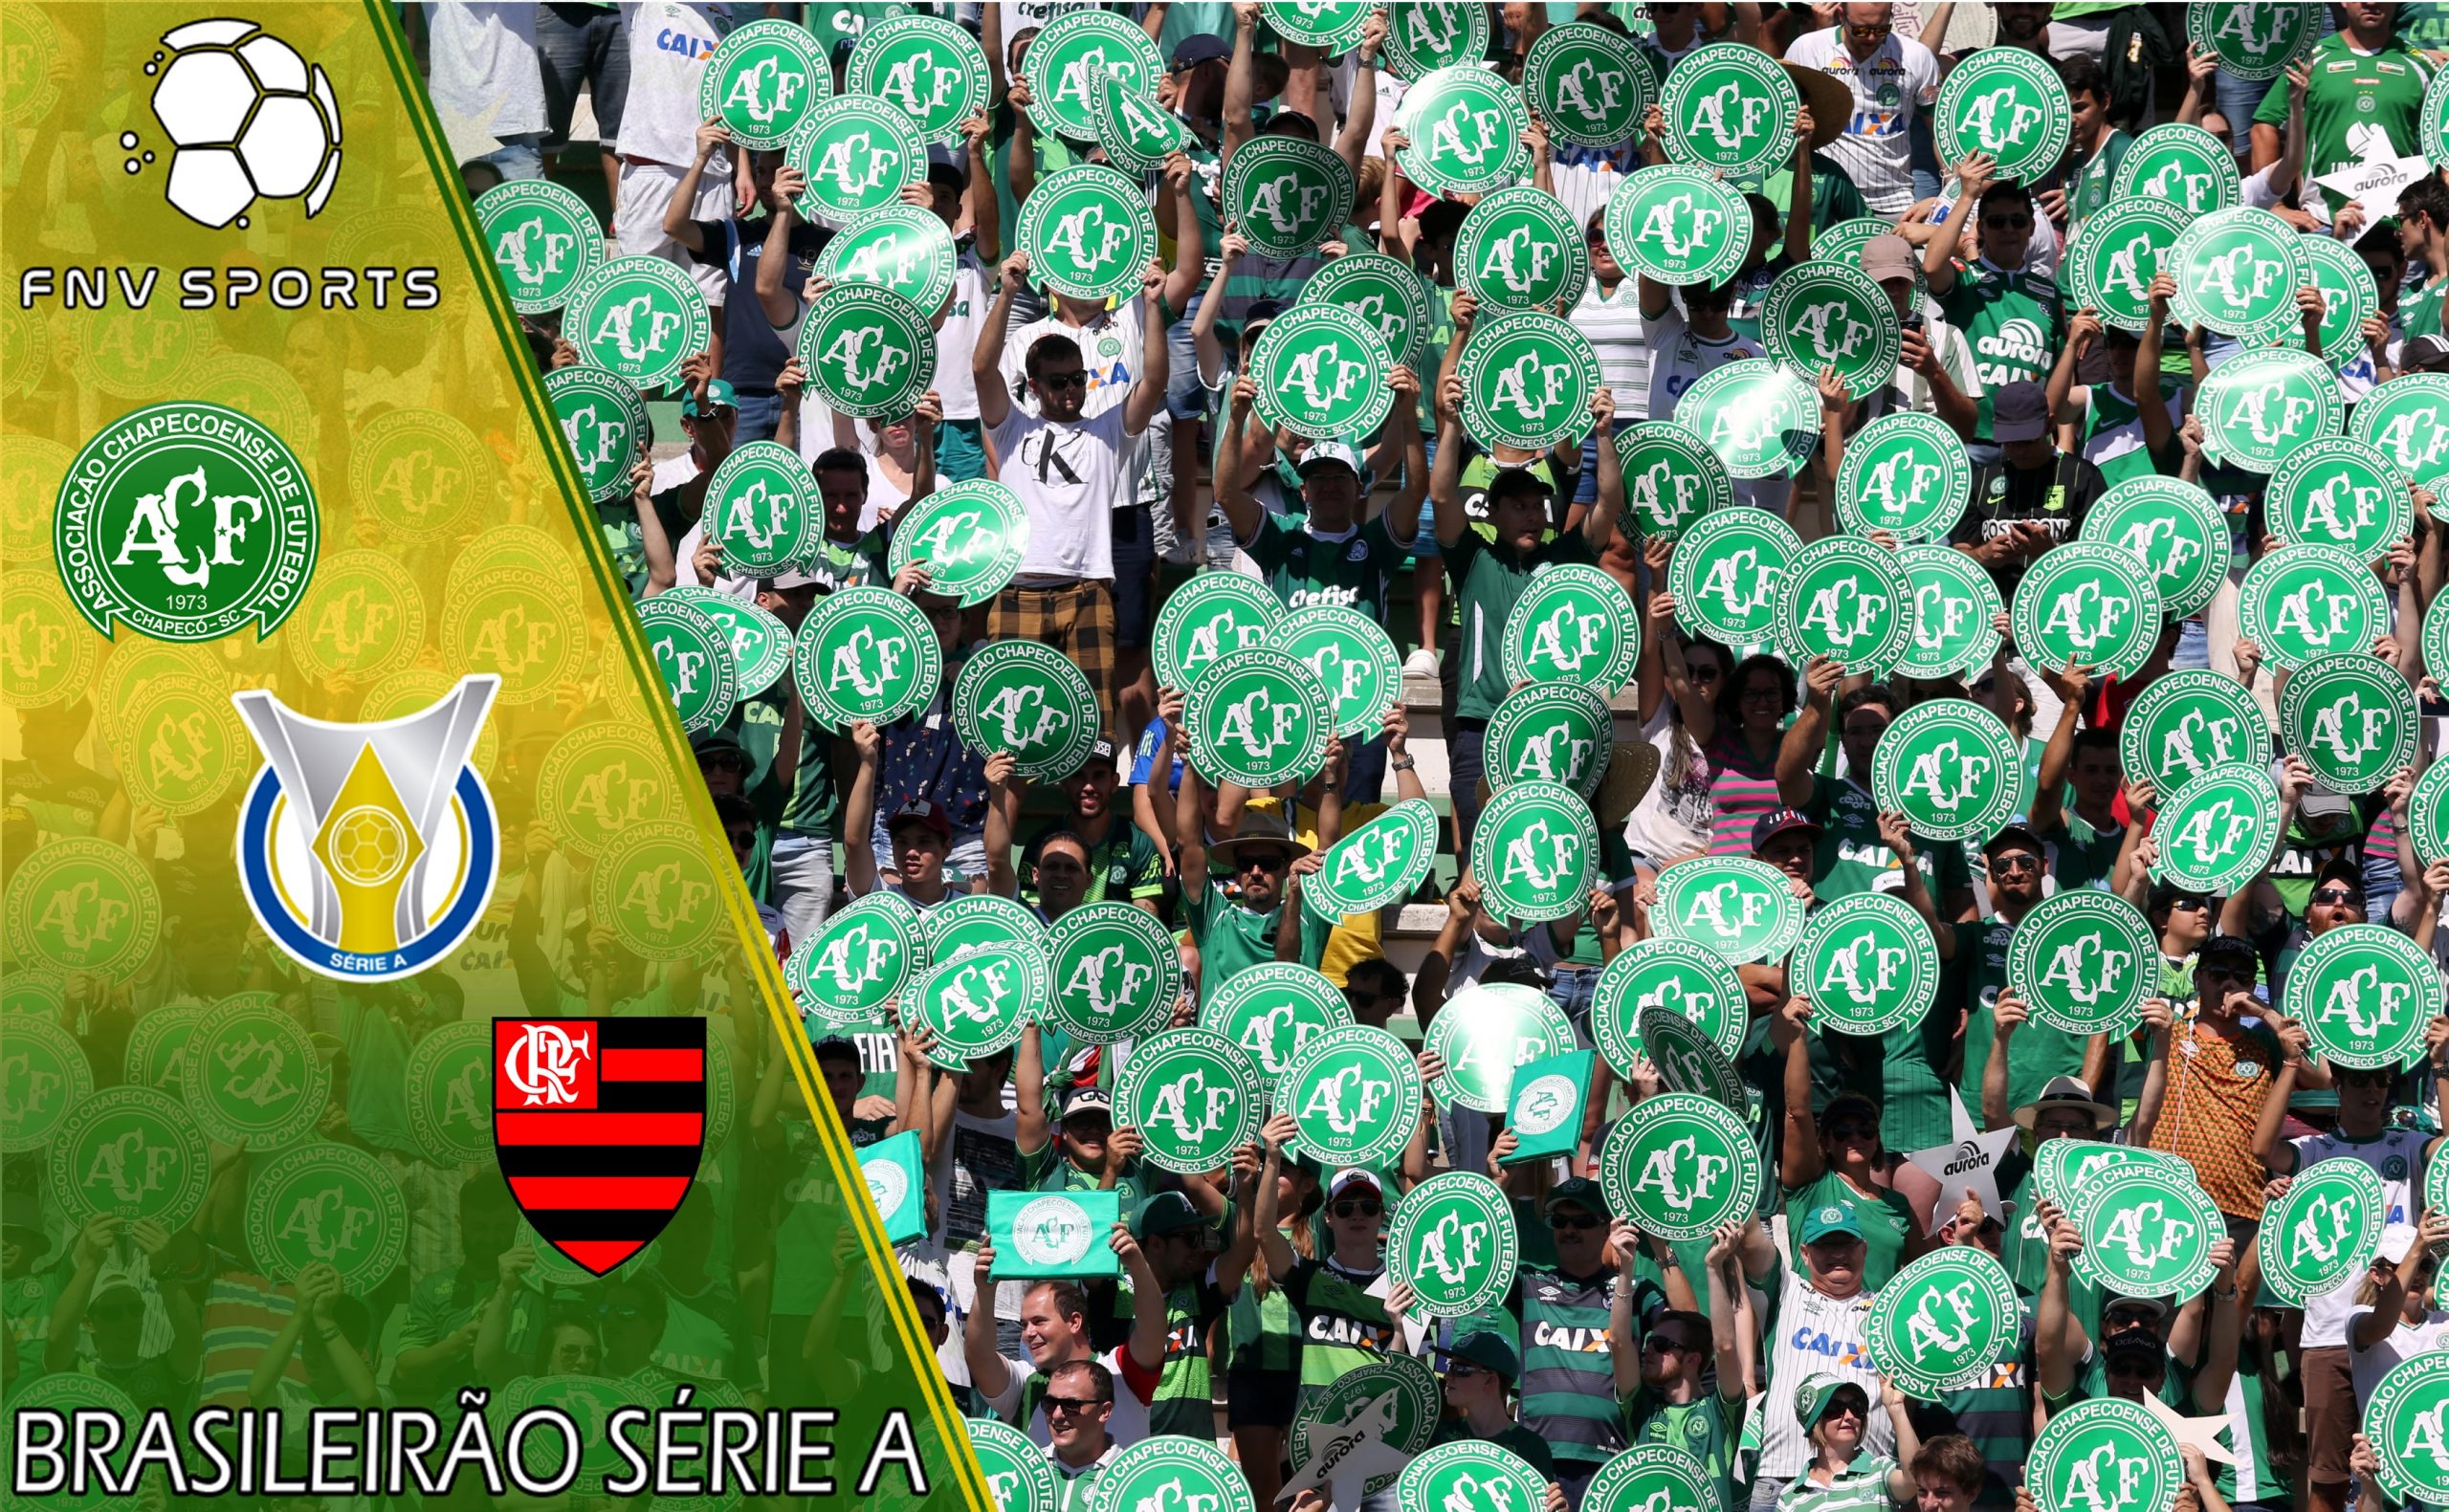 Chapecoense x Flamengo